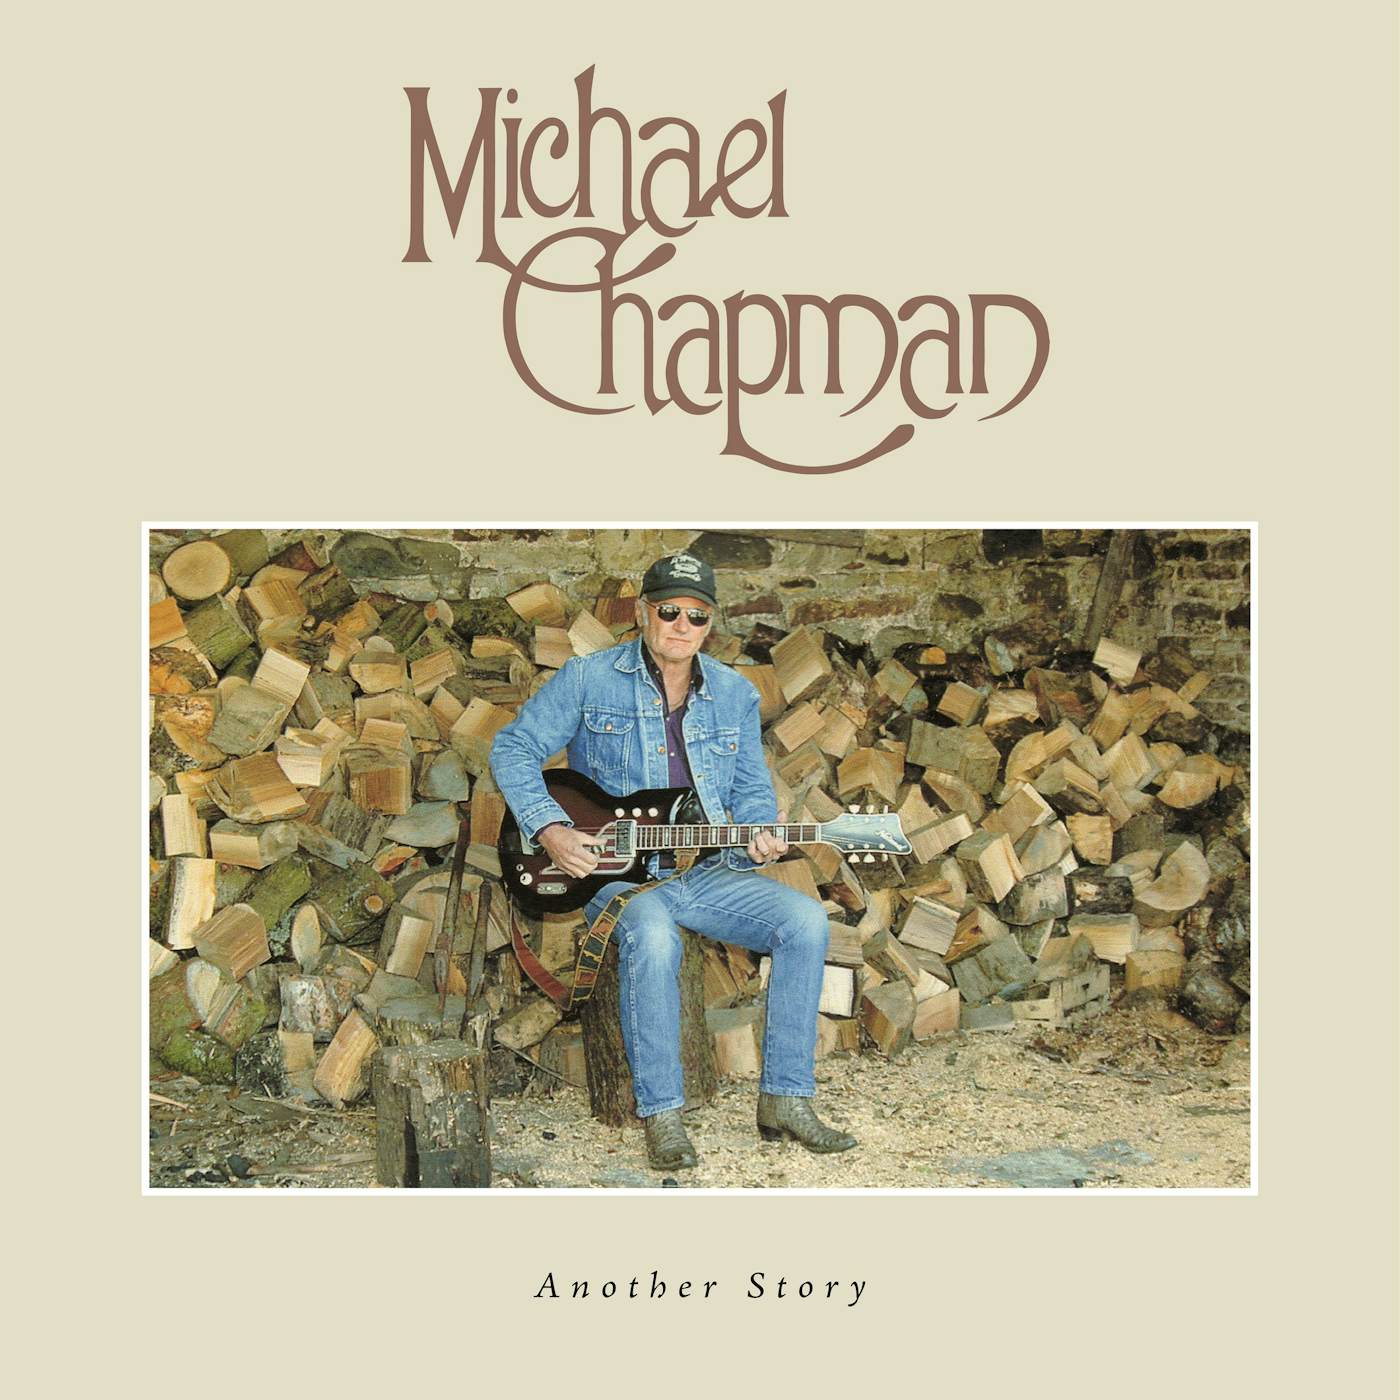 Michael Chapman ANOTHER STORY Vinyl Record